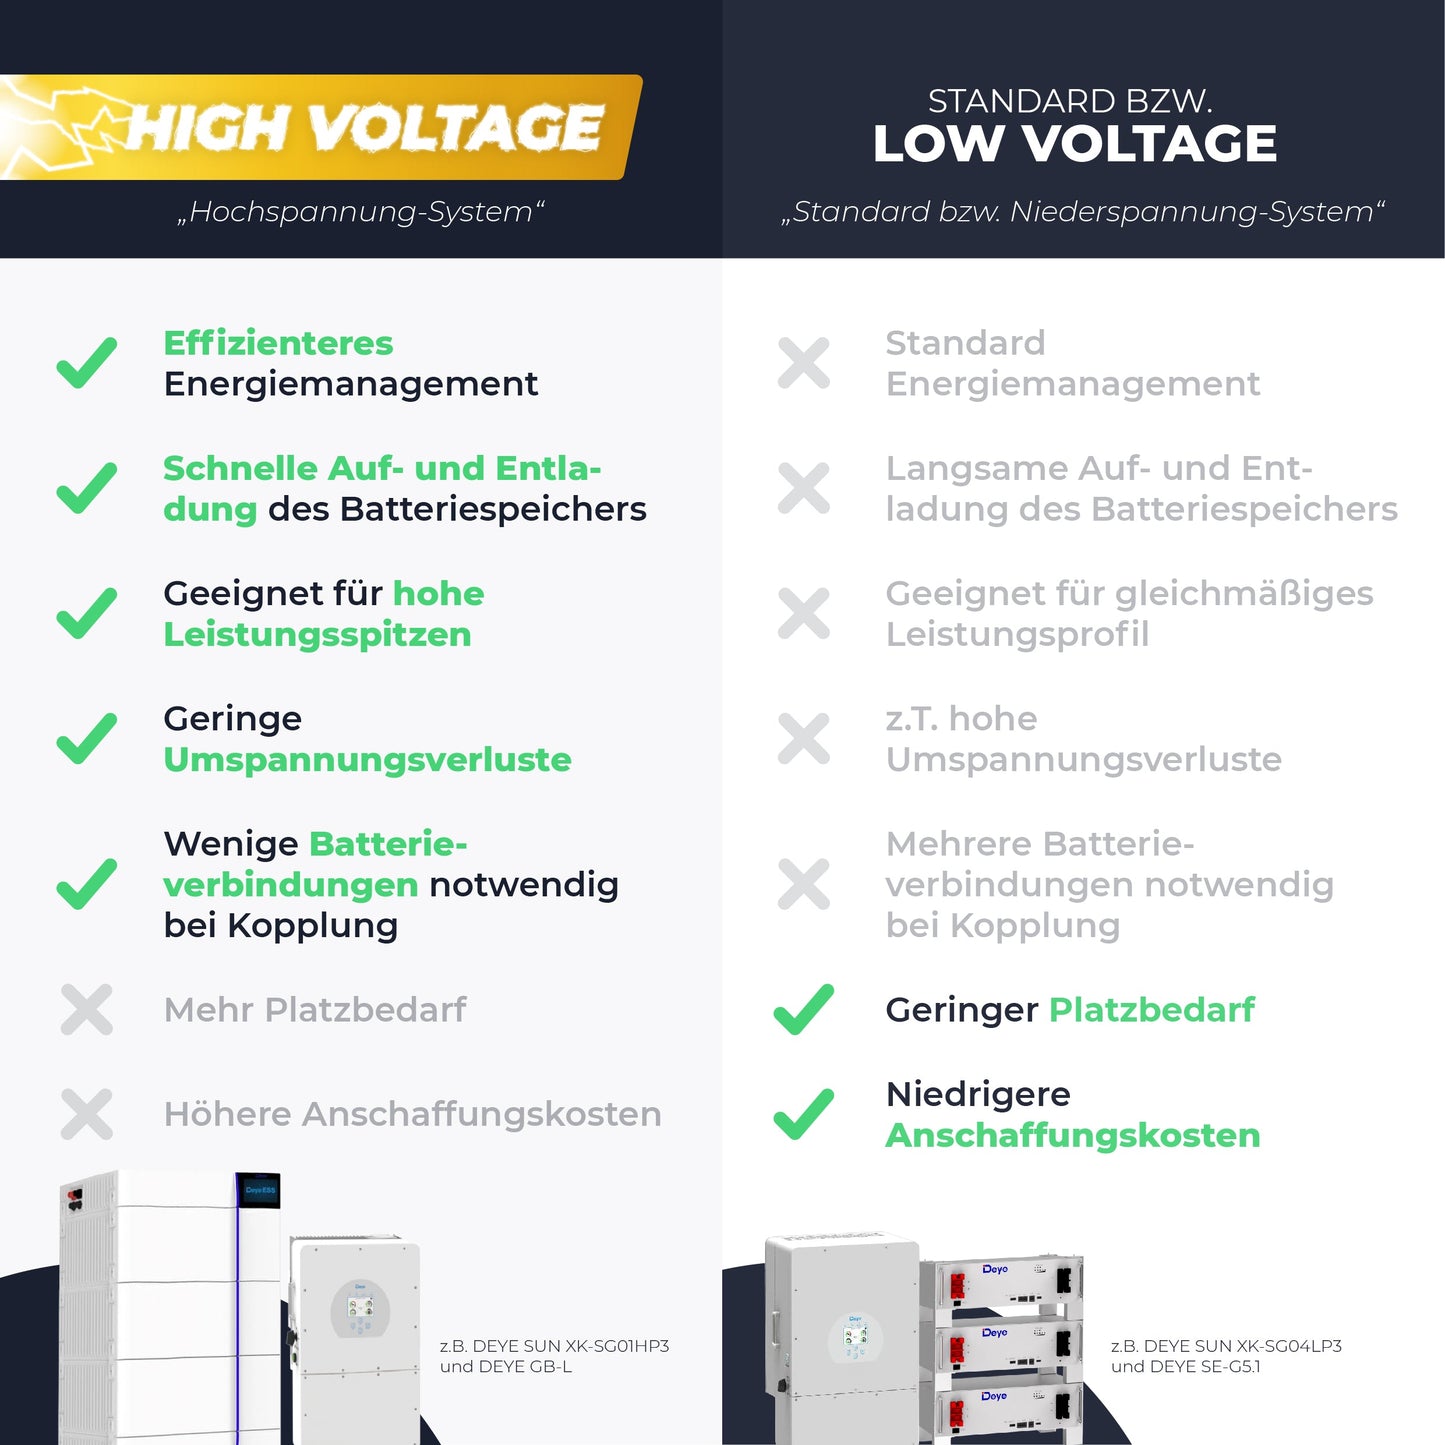 SOLARWAY High Voltage Solaranlage Komplettset 30kW | Fox ESS 30kW | Bifazial inkl. Montagesystem, App & WiFi